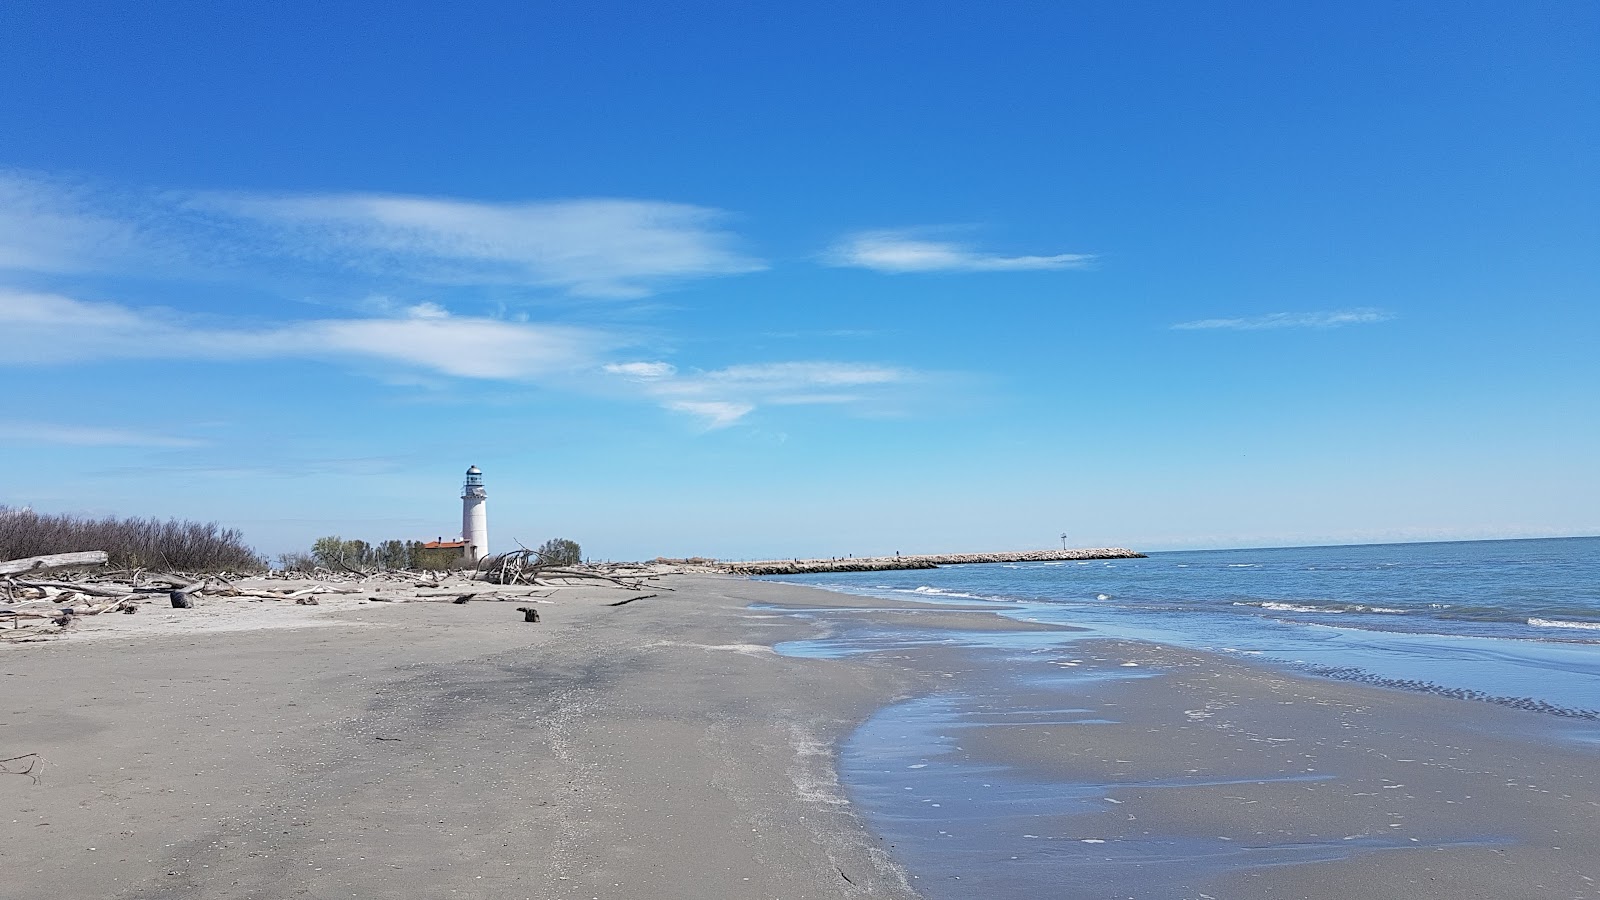 Foto de Spiaggia dell'Isola dell'Amore com água azul superfície